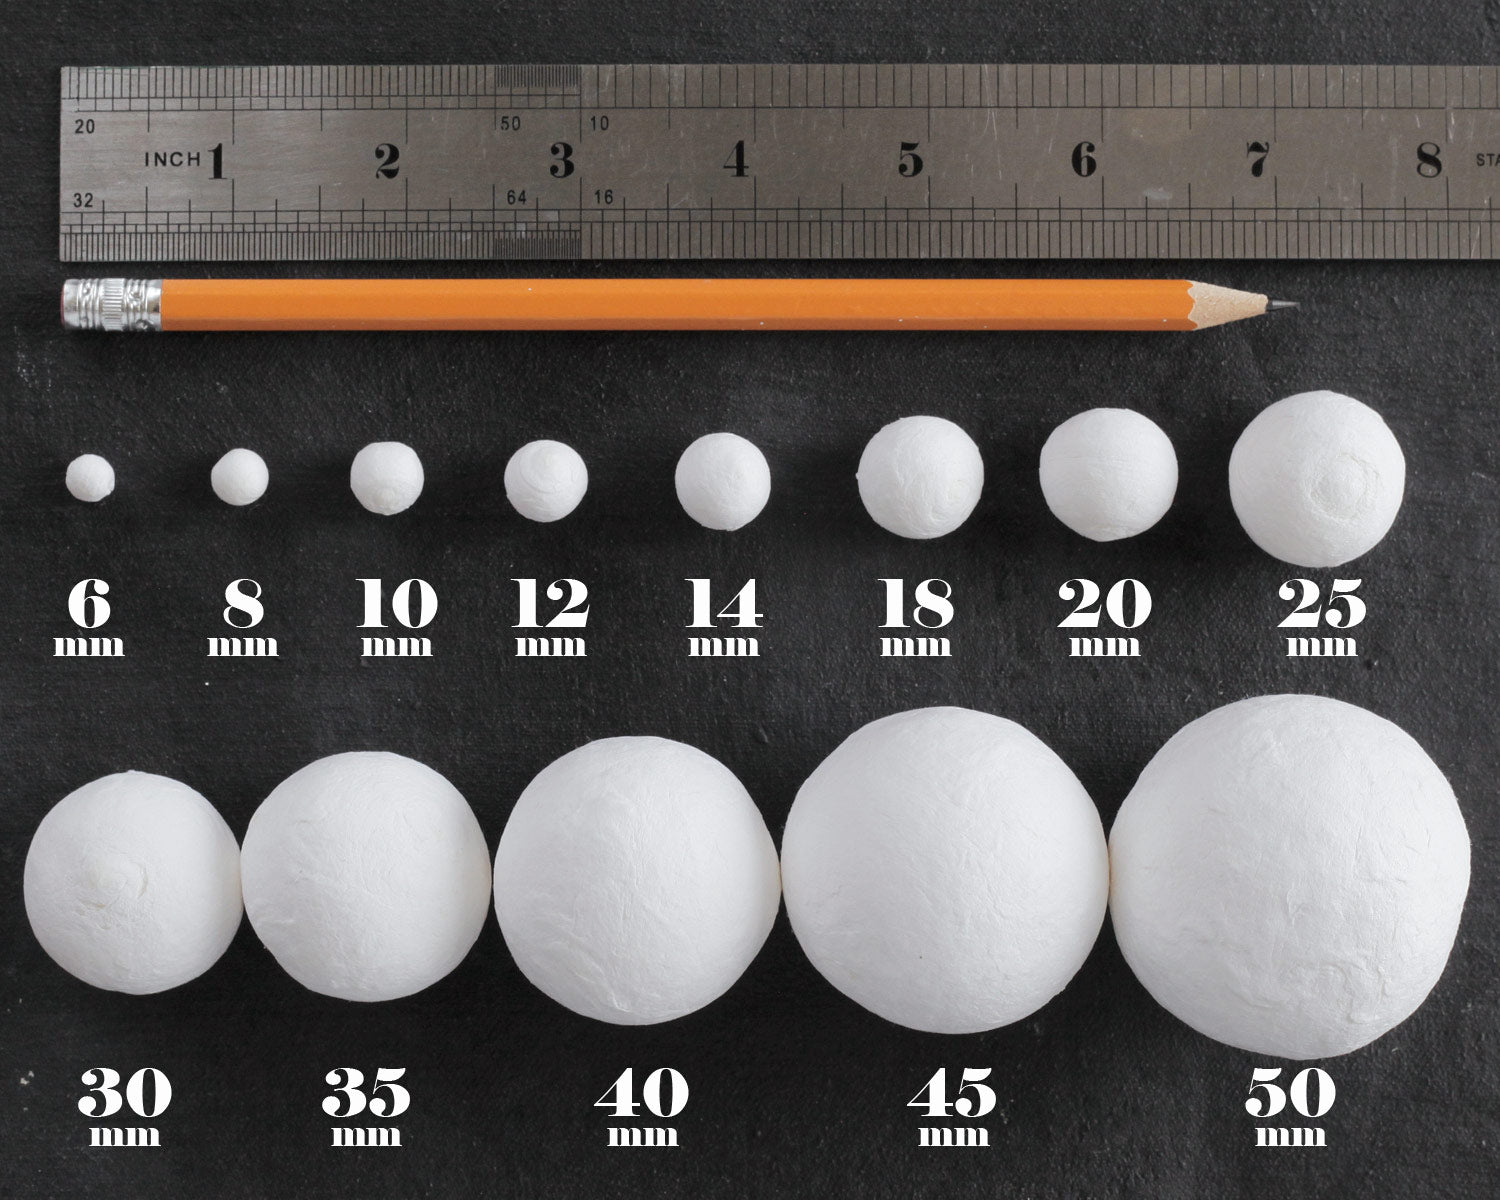 Spun Cotton Balls: 25mm Paper Ball Craft Shapes, 50 Pcs.